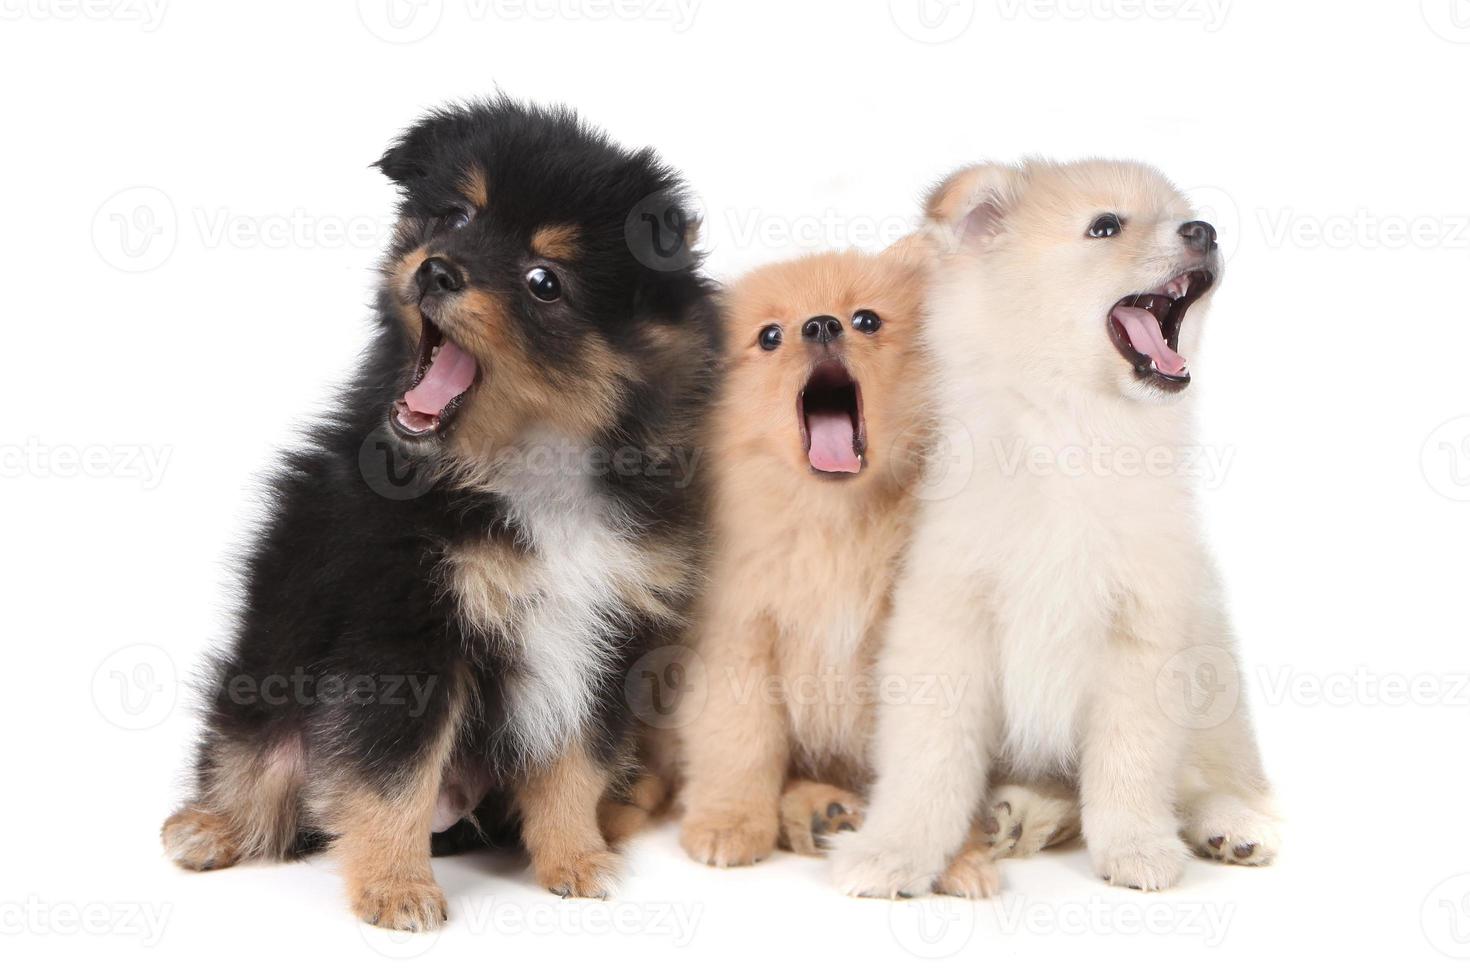 Howling Singing Pomeranian Puppies on White Background photo